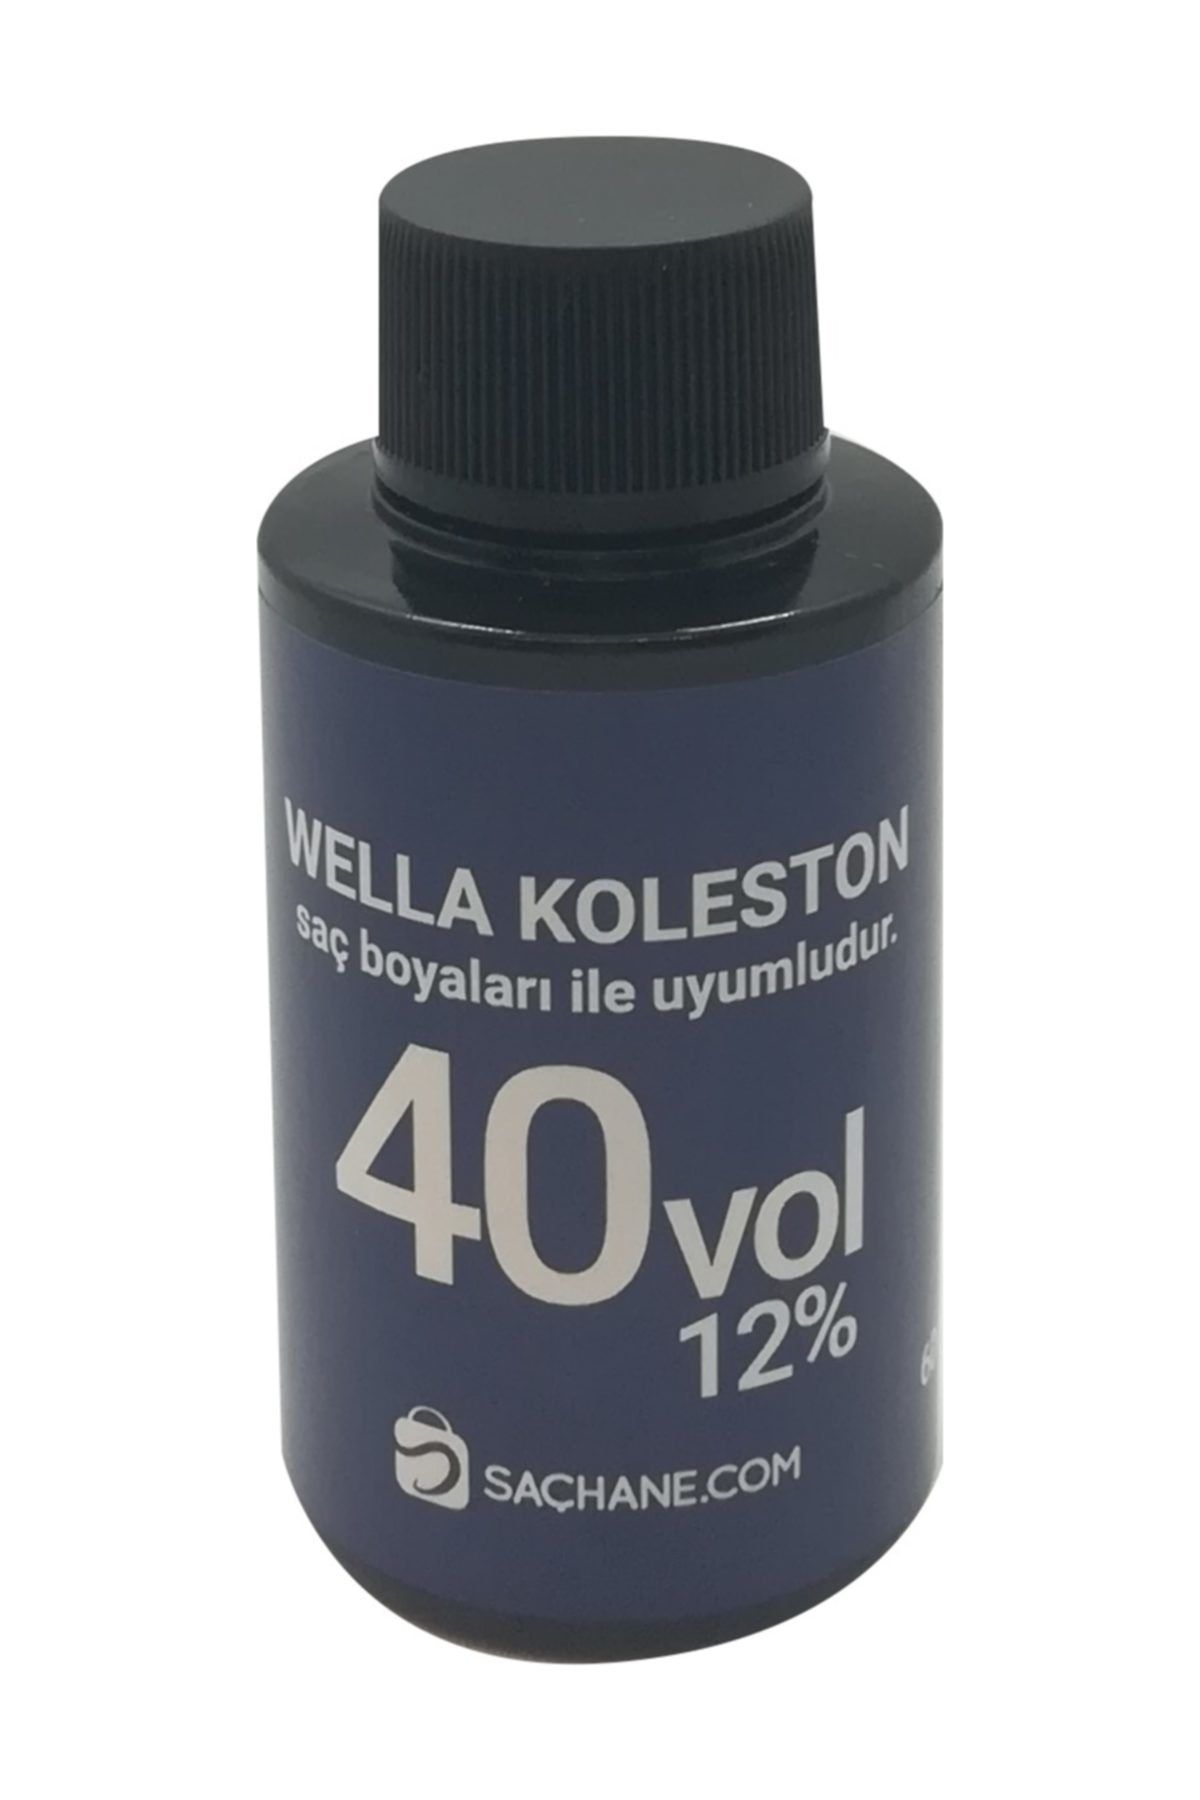 Wella Welloxon Perfect %12 40 Volum Oksidan 60ml